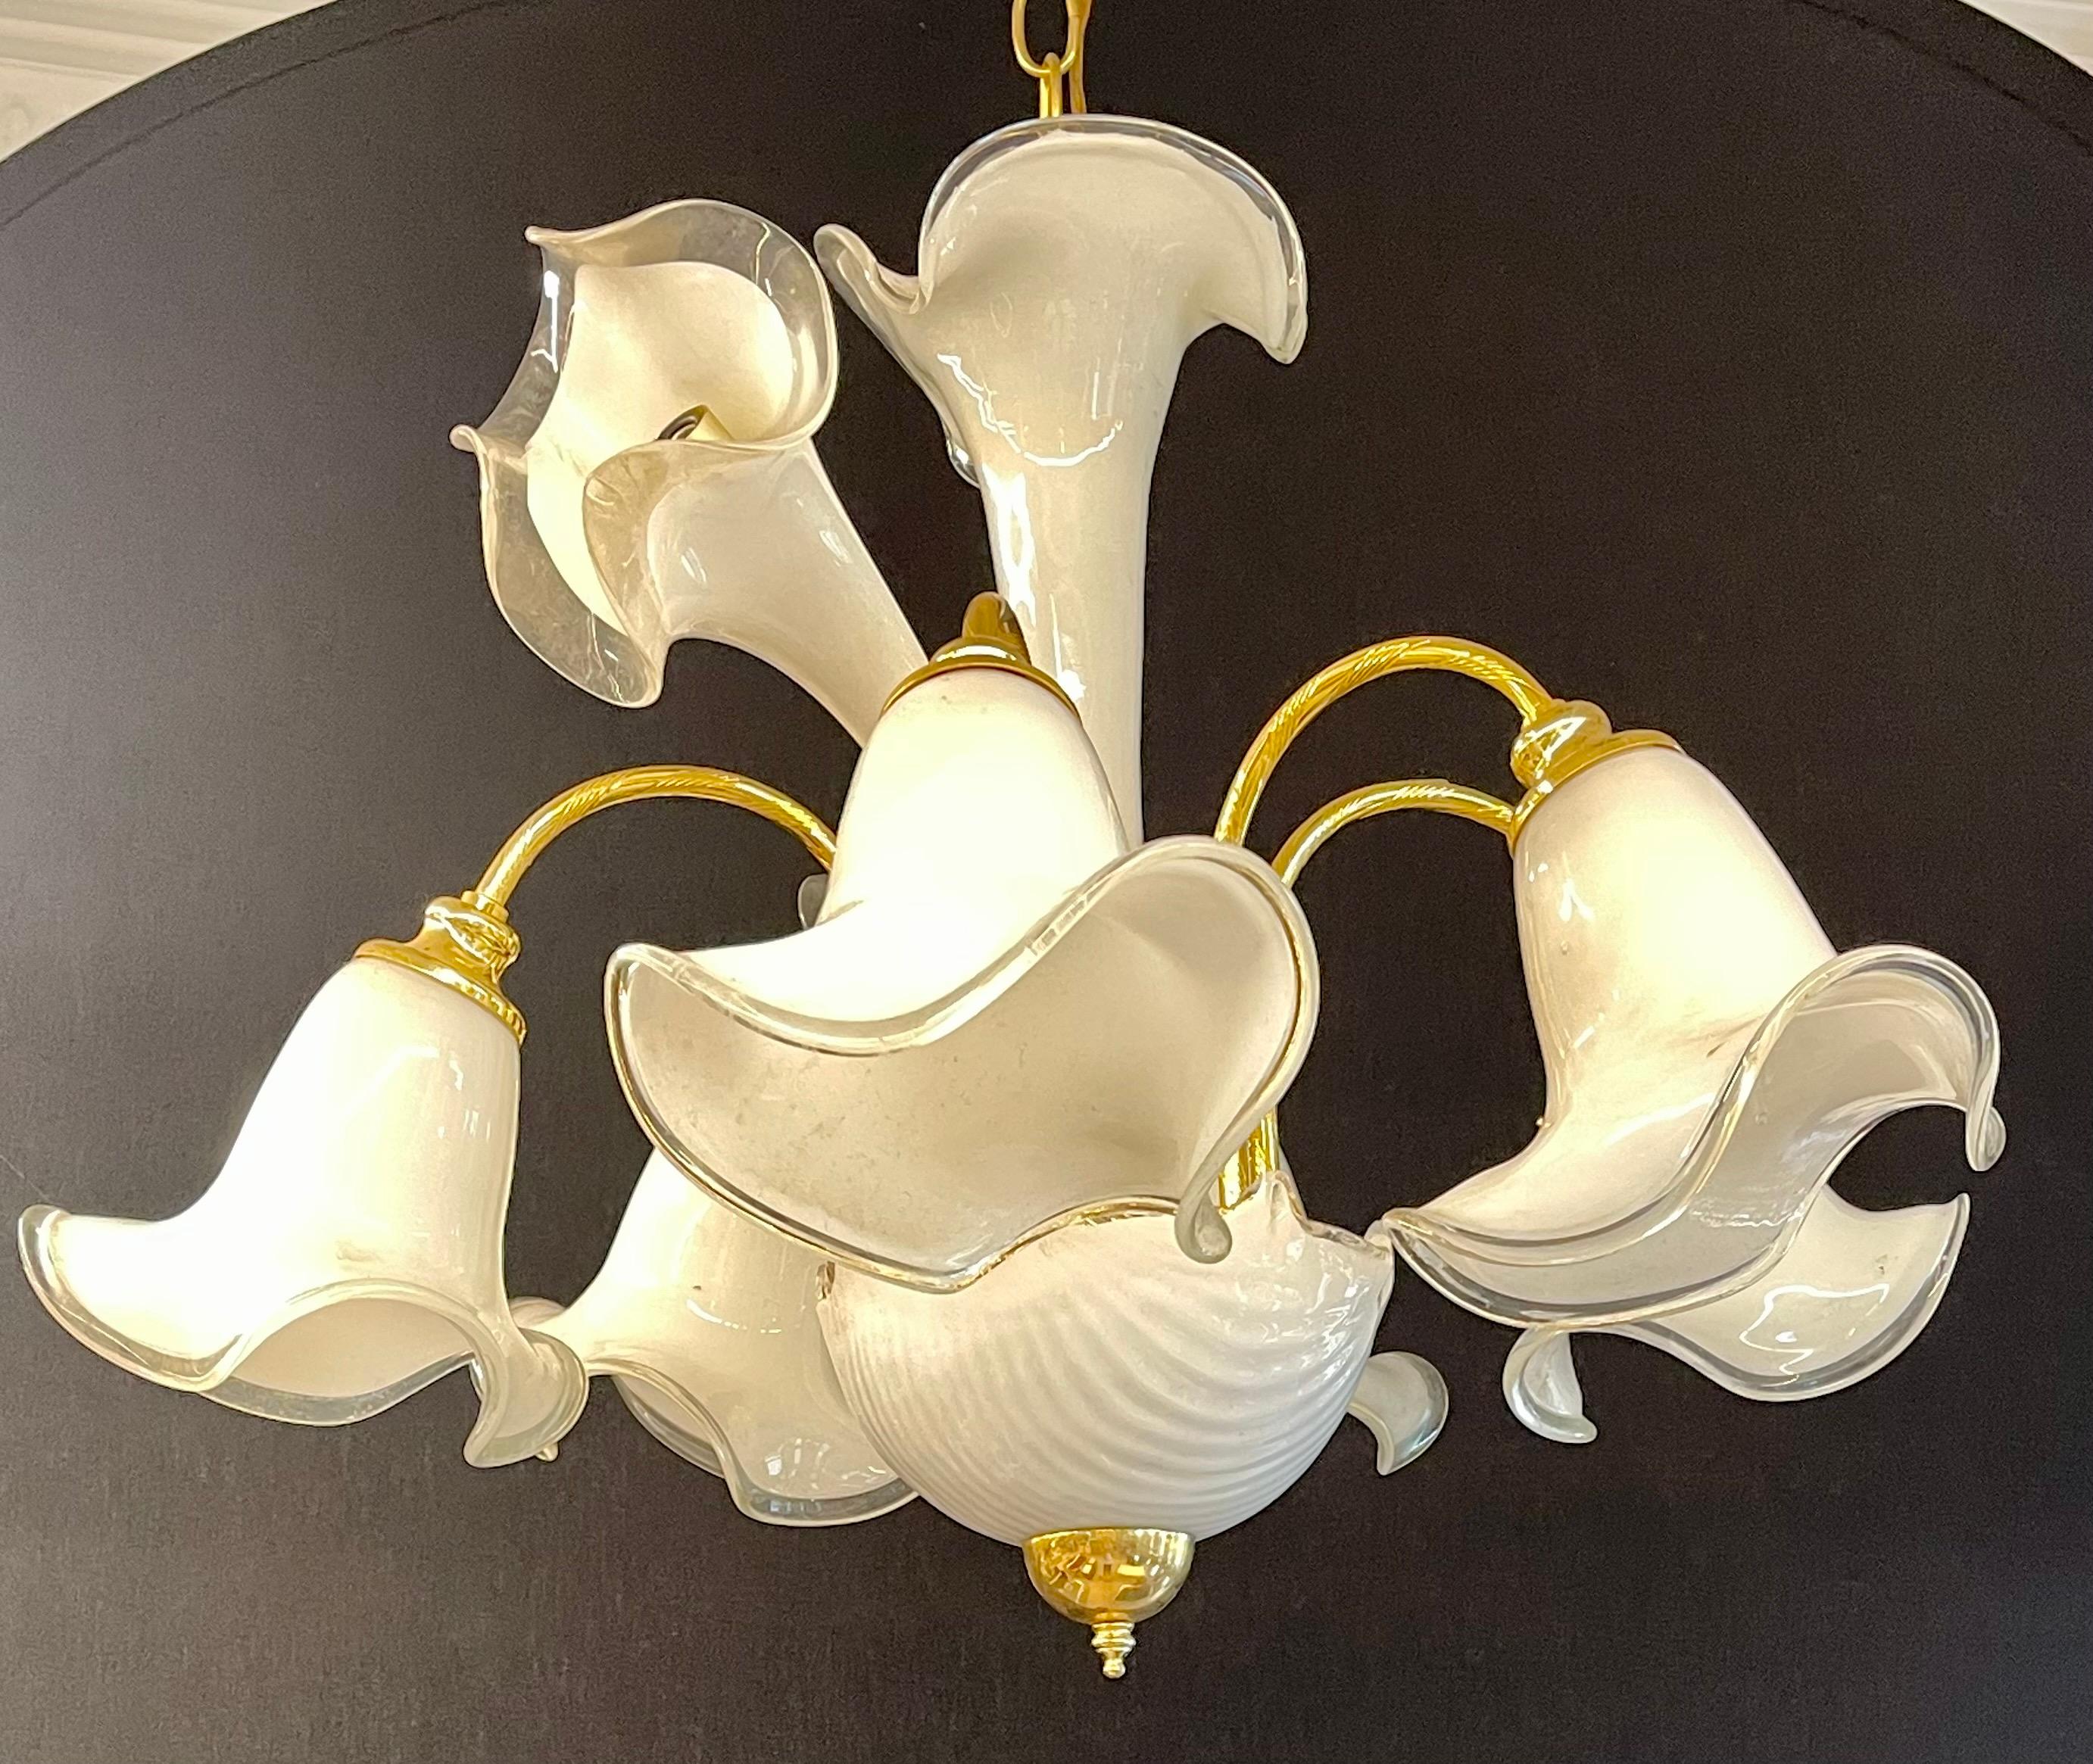 White murano glass chandelier having 9 lights in the tulip form.